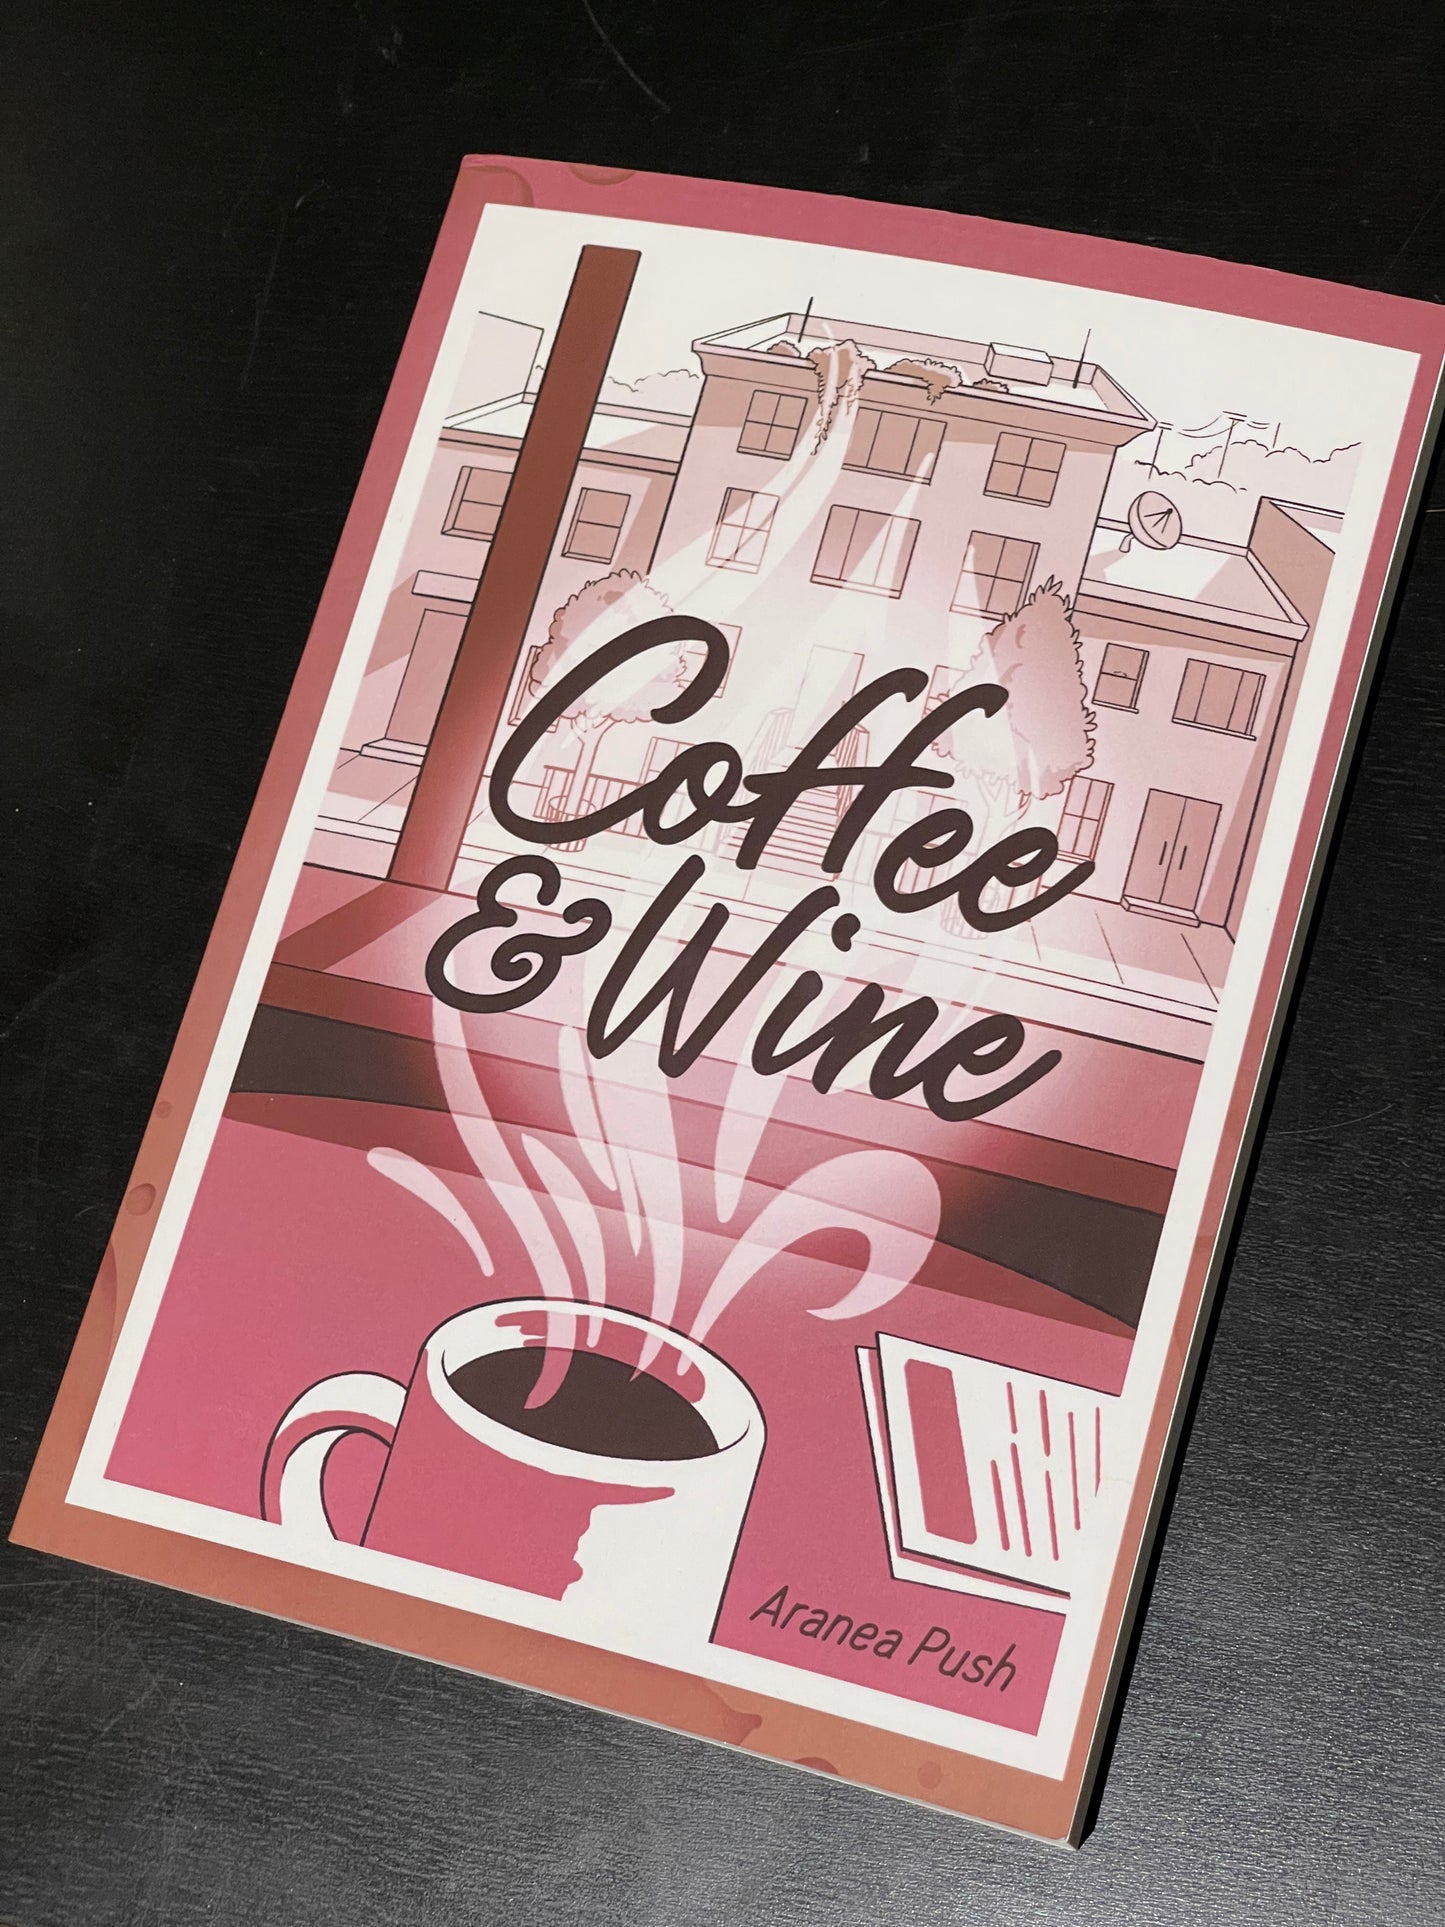 Aranea Push - Graphic Novel - Coffee & Wine (signed)